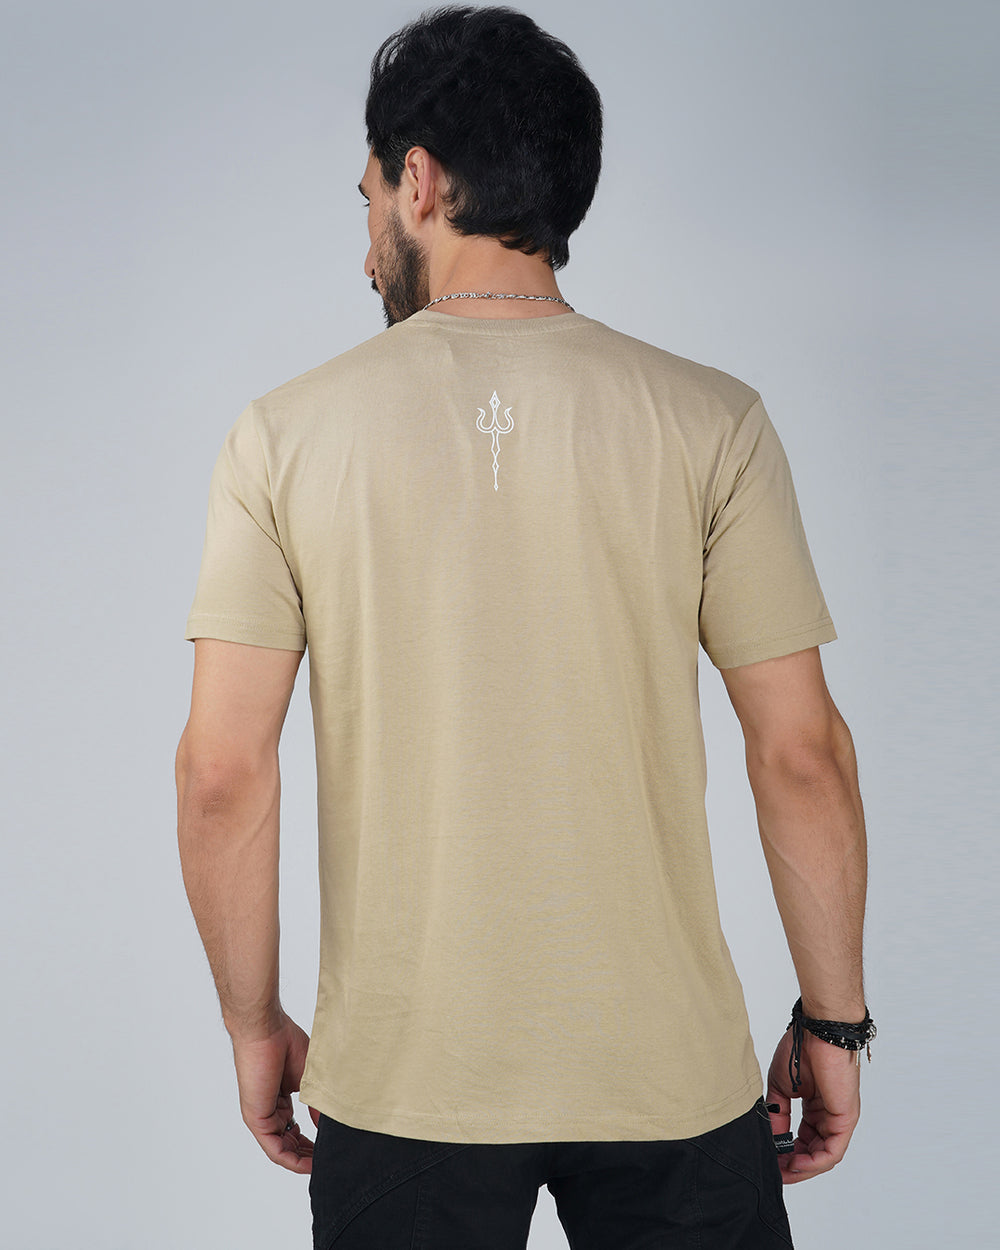 Sacred Trishul UV Light Reactive & Glow in the Dark Buff Color T-Shirt